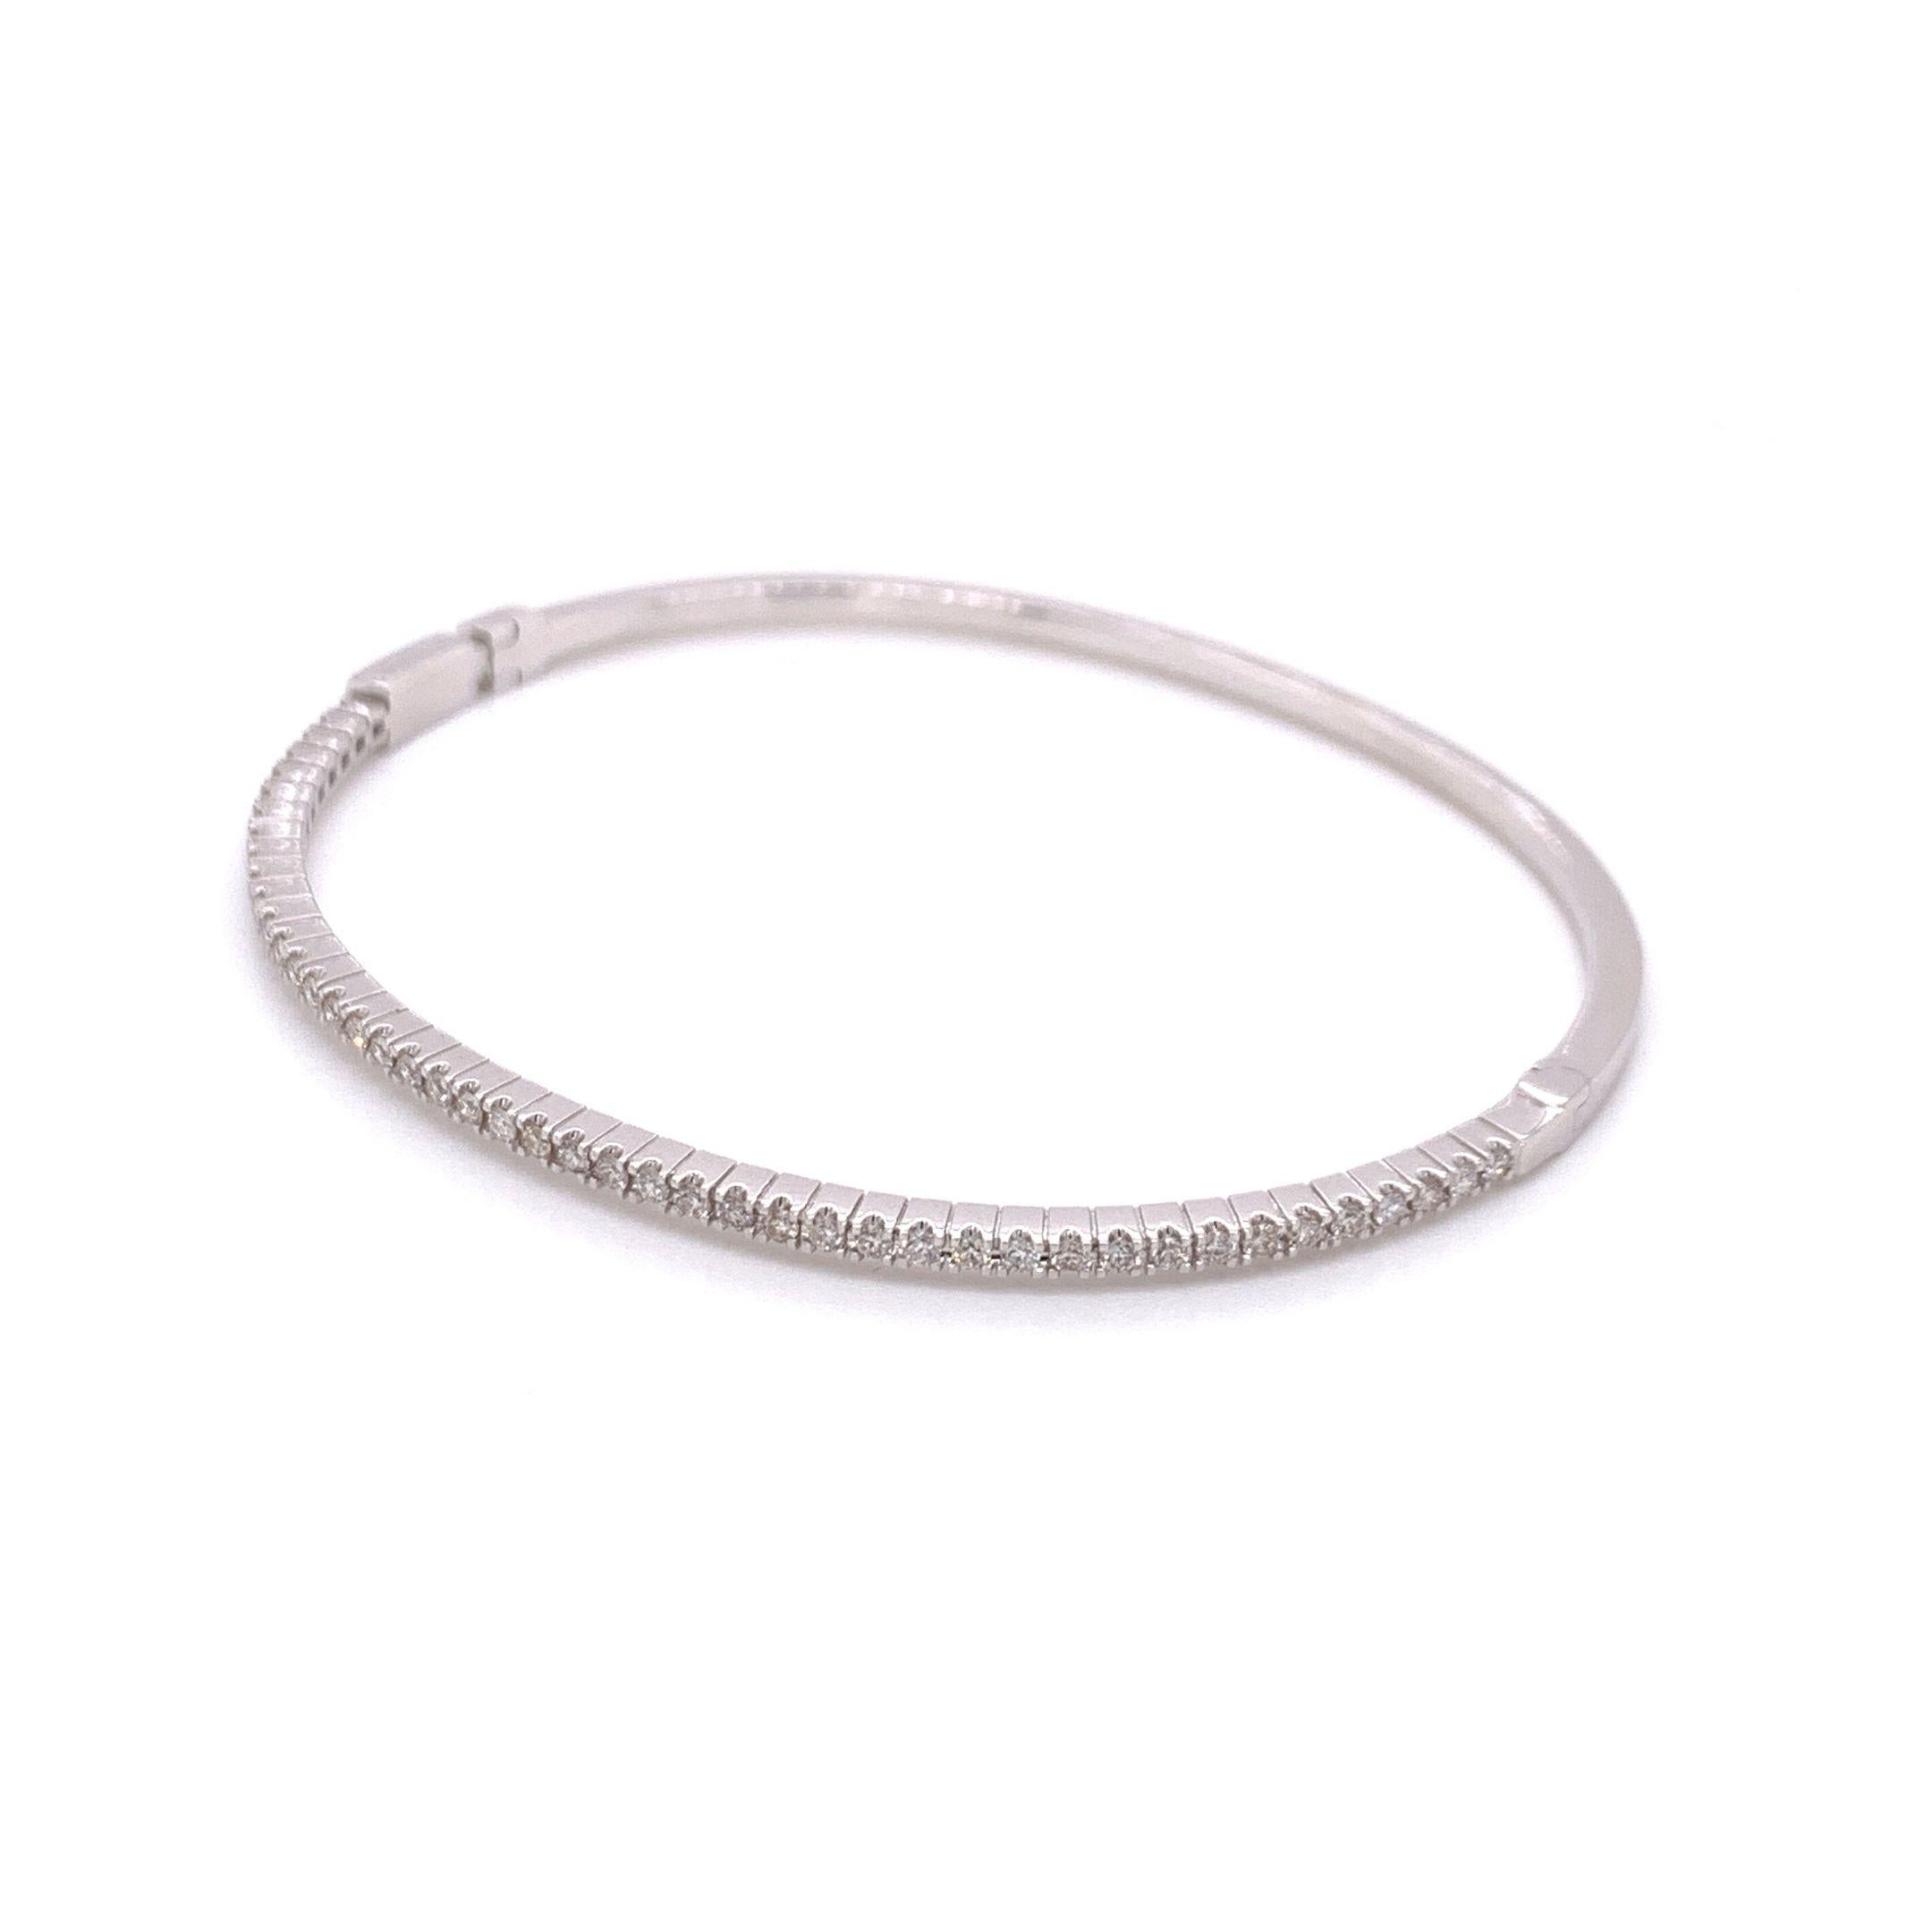 Bangle Diamond Half Tennis bracelet made with real/natural brilliant cut diamonds. Diamond Weight: 0.60 carats, Diamond Quantity: 45 (round diamonds), Color: G-H, Clarity: VS. Mounted on 18 karat white gold. 